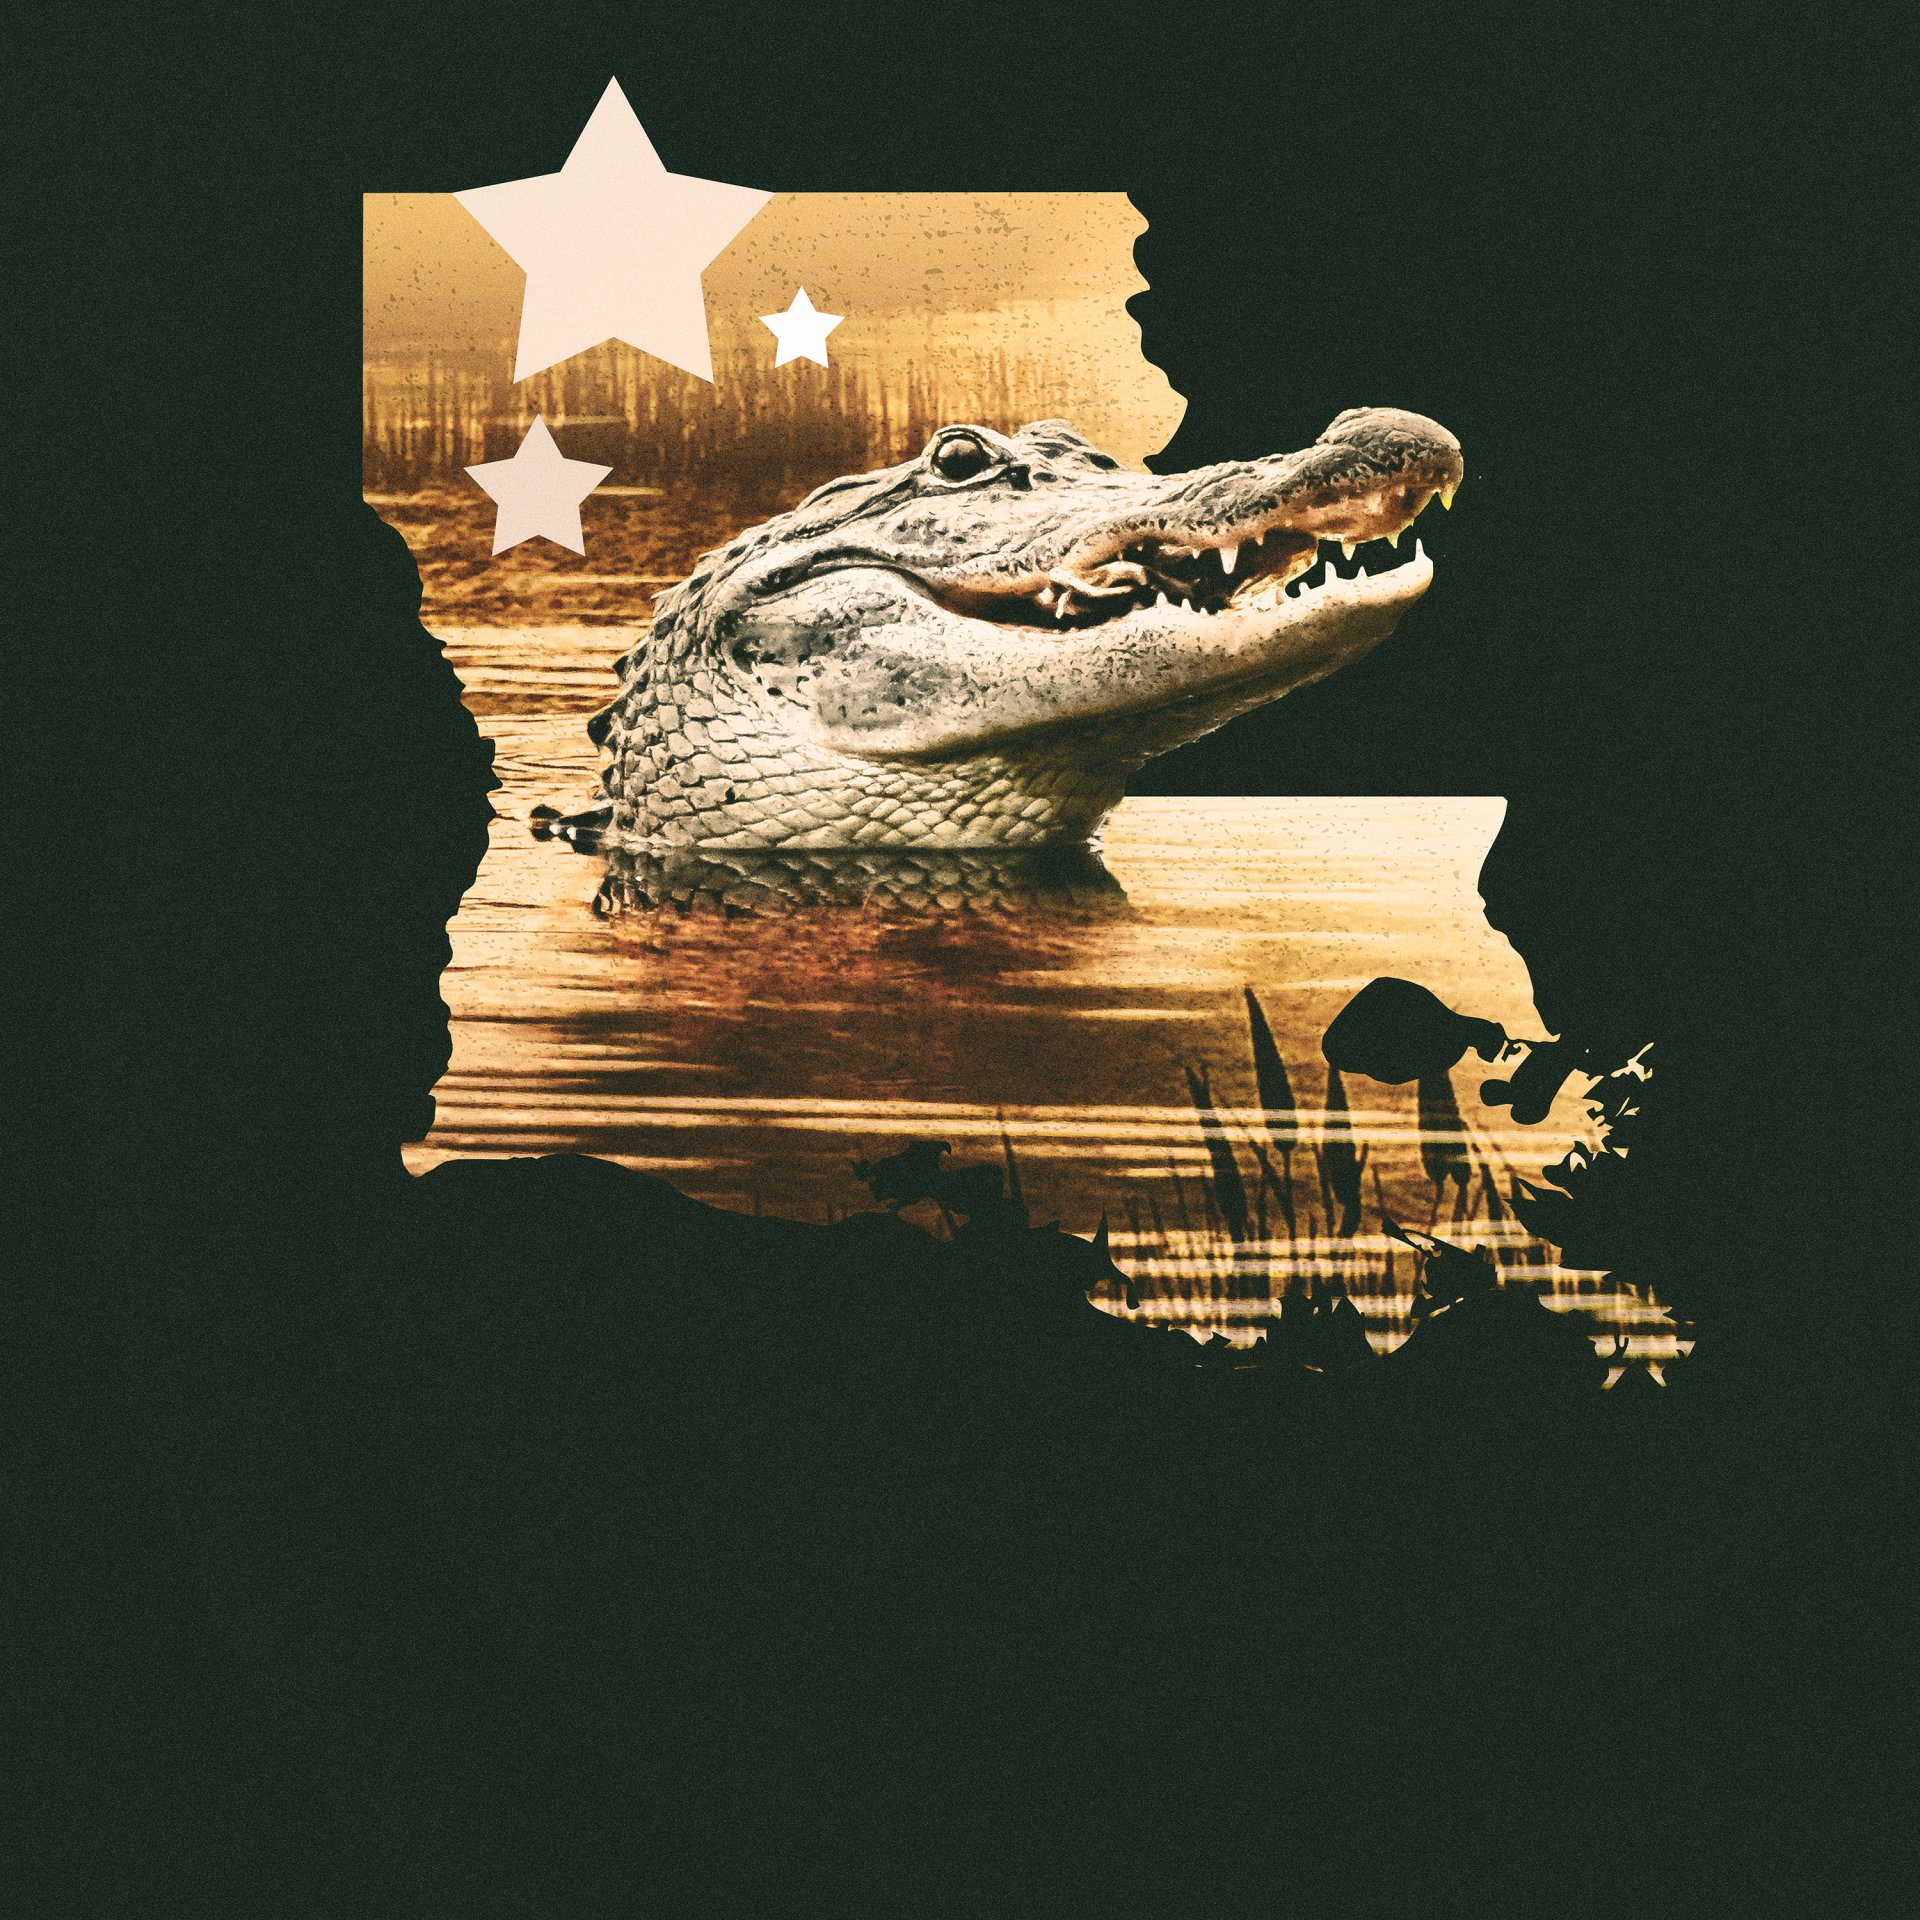 Louisiana Law - Animal Planet GO